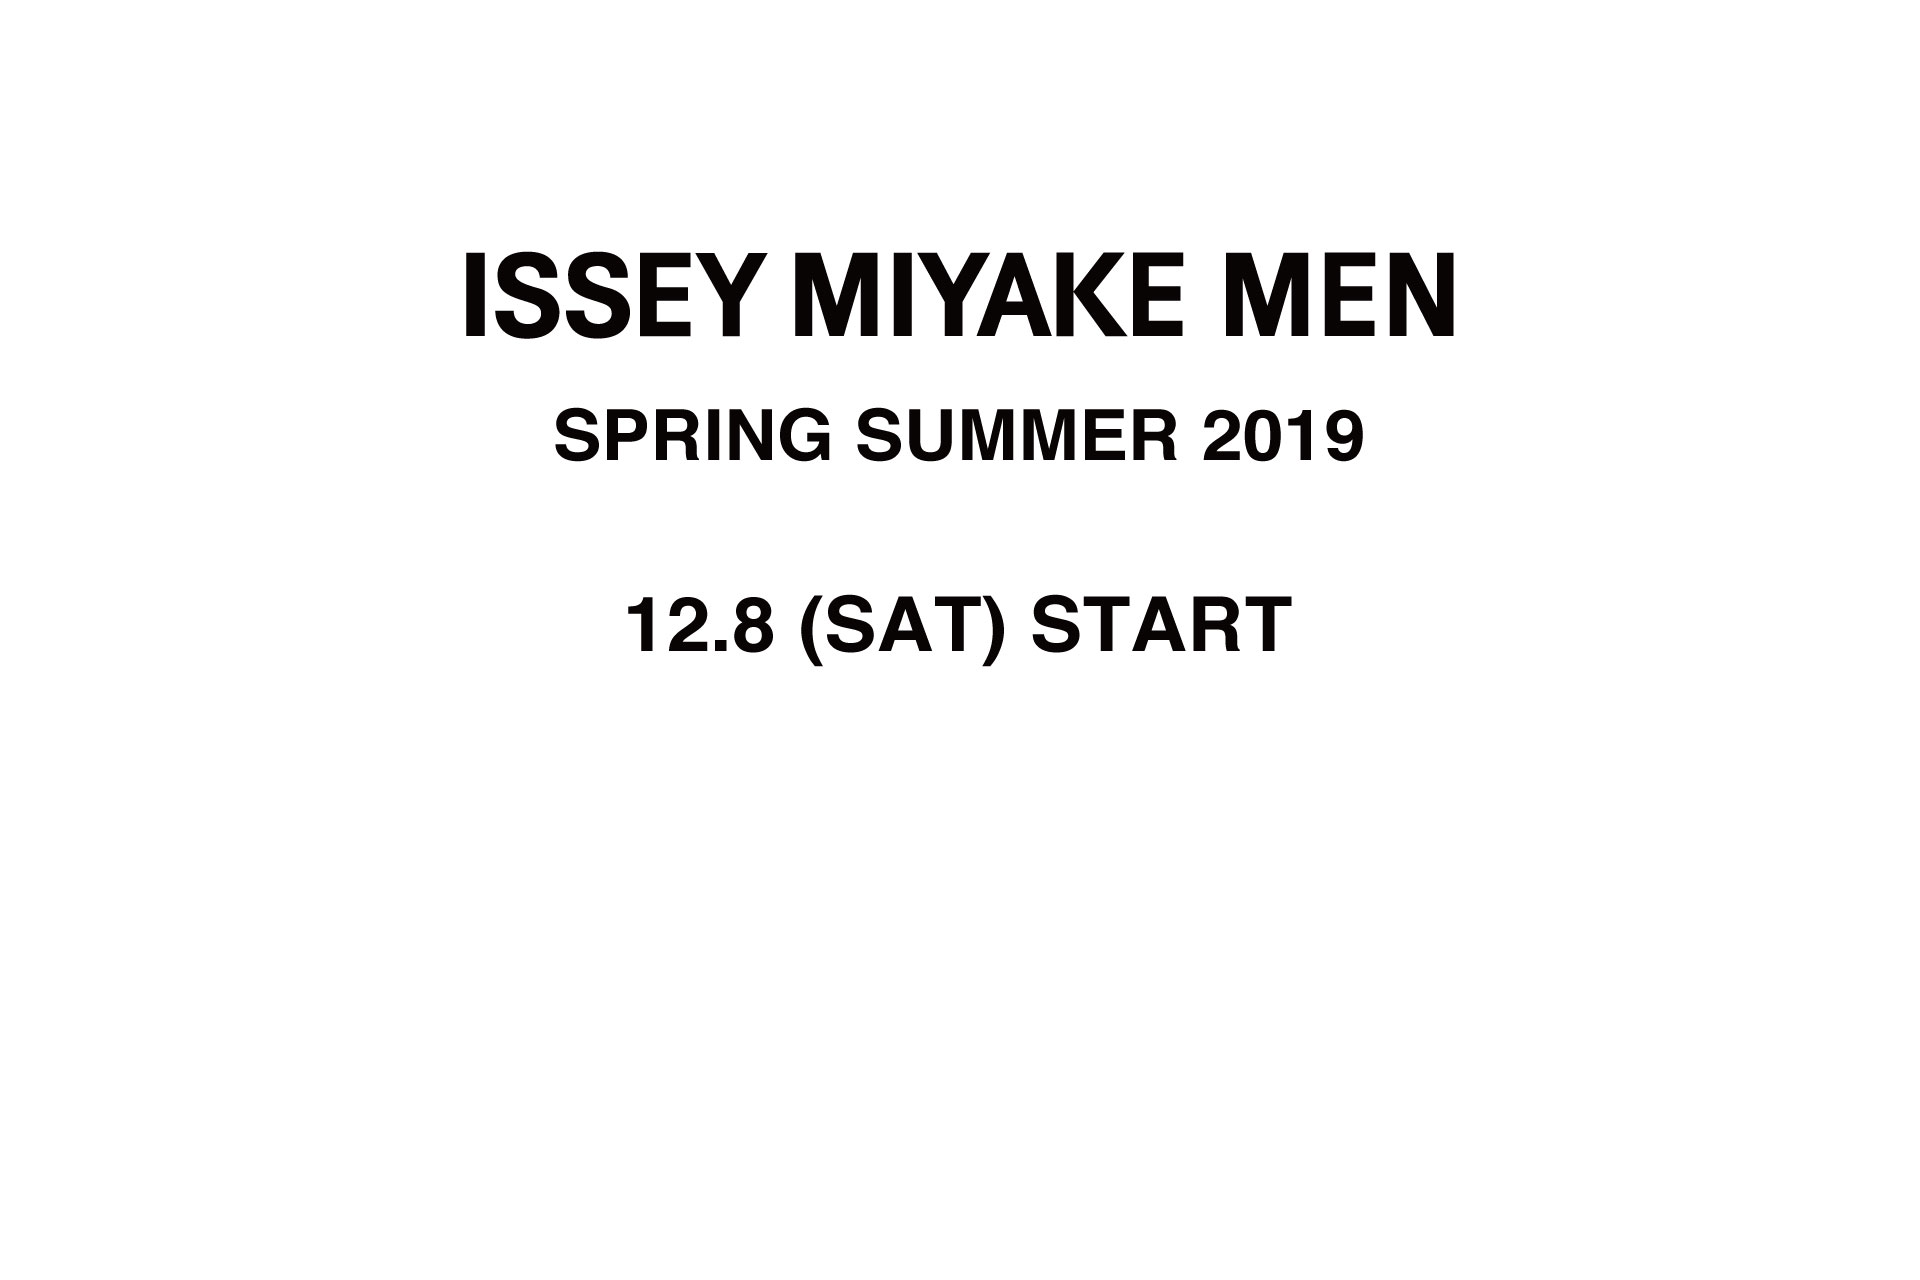 ISSEY MIYAKE MEN SPRING SUMMER 2019 START